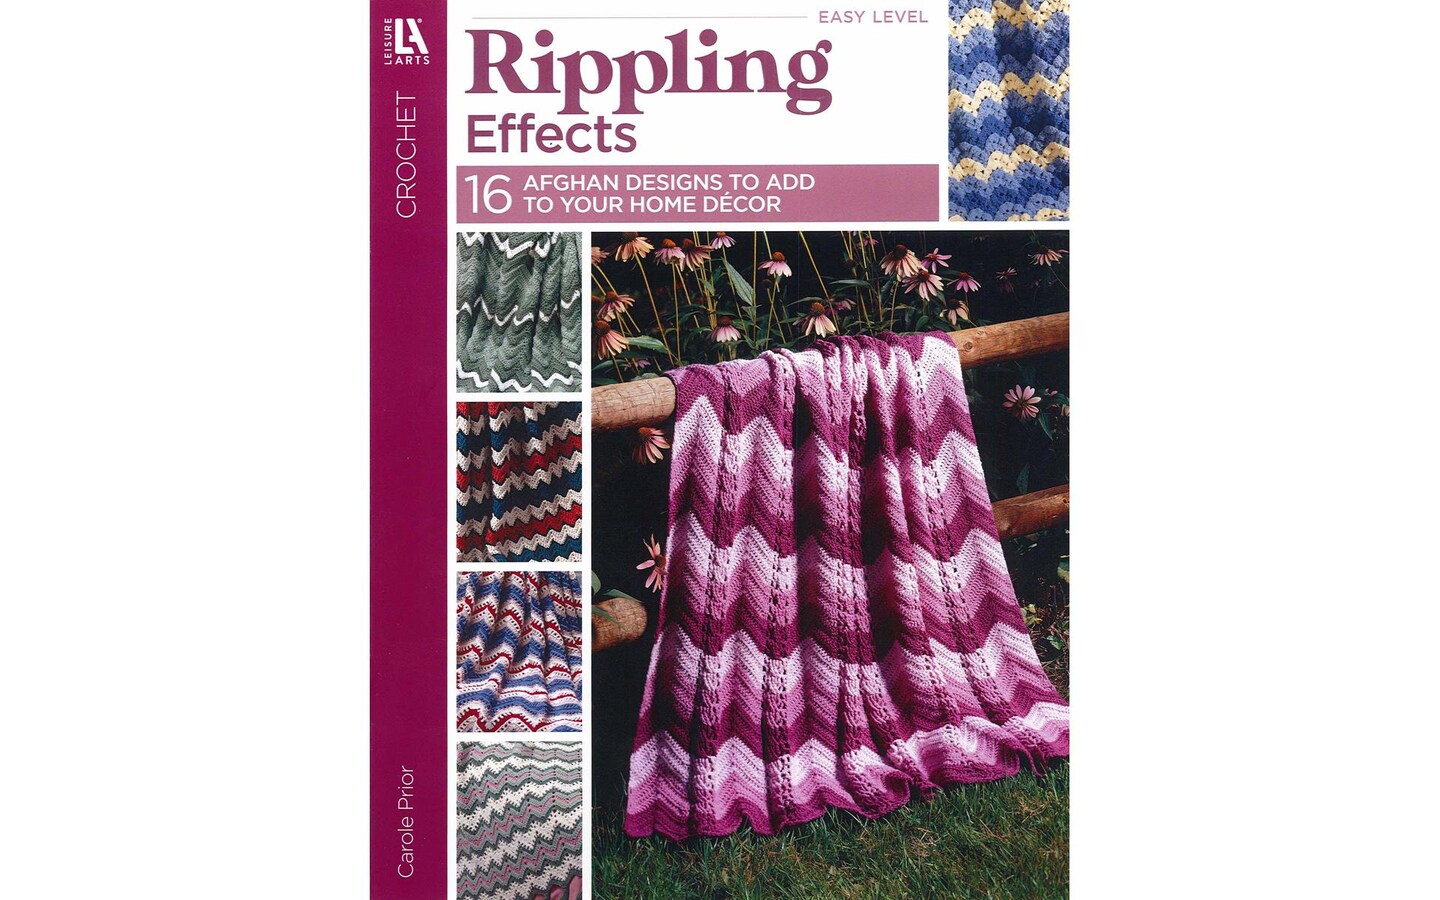 Book: Creative Crochet Projects Crochet Patterns How to Crochet Crochet  Projects for Beginners Crochet Books 